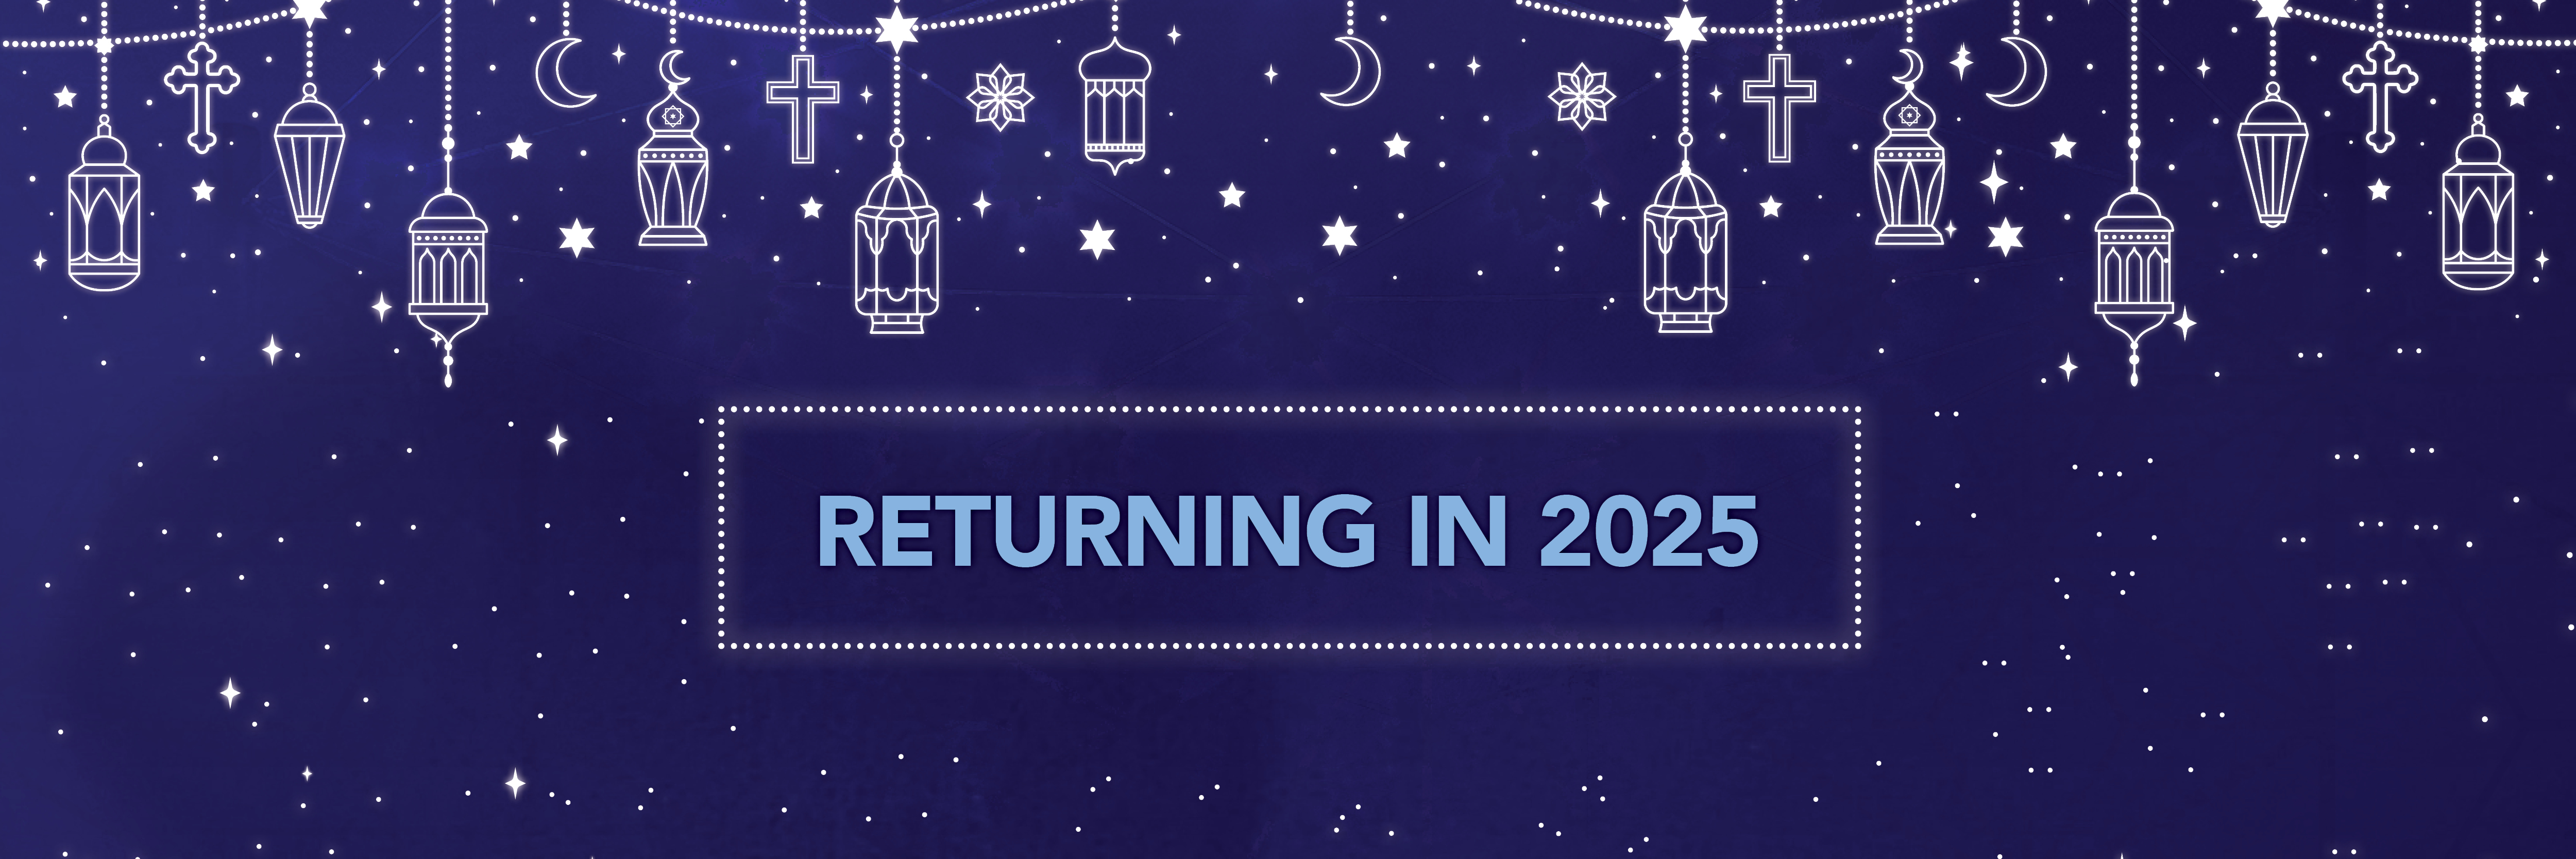 Returning in 2025